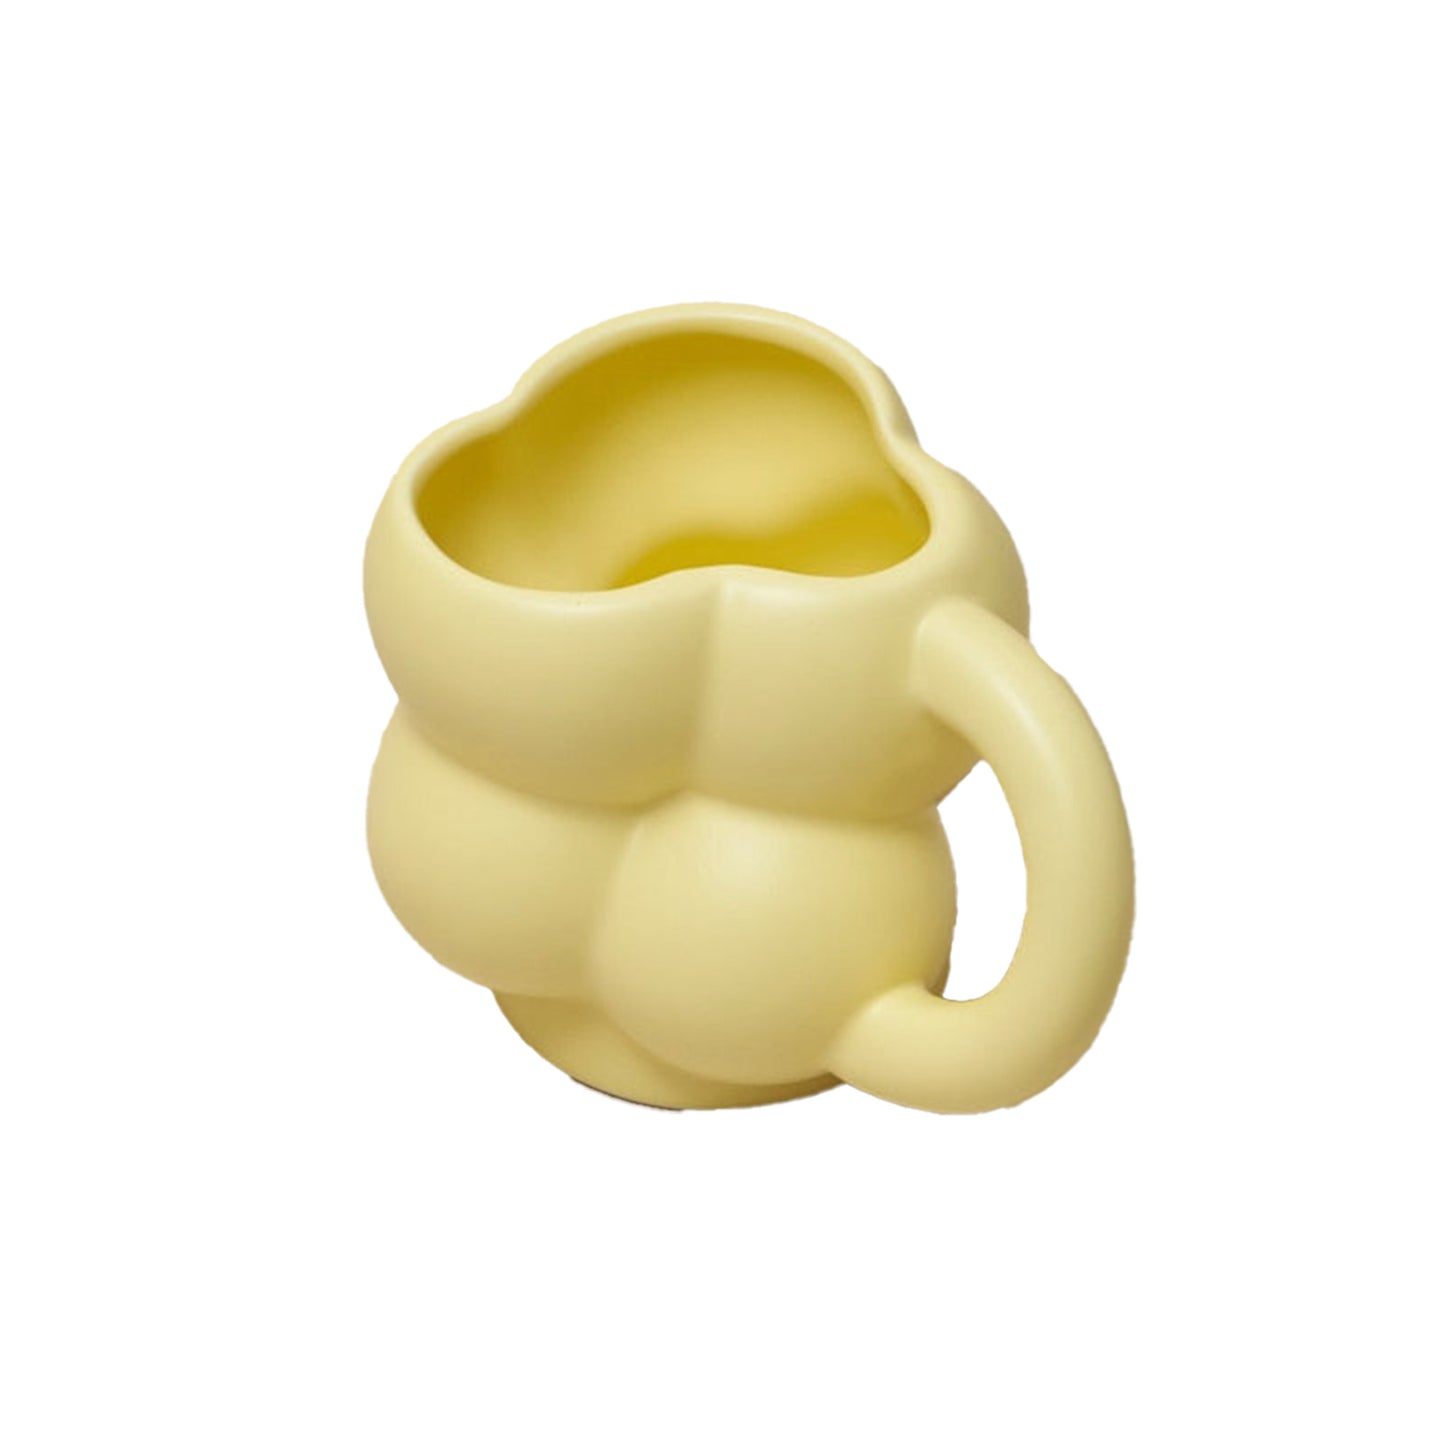 Yellow Bubble Ceramic Mug